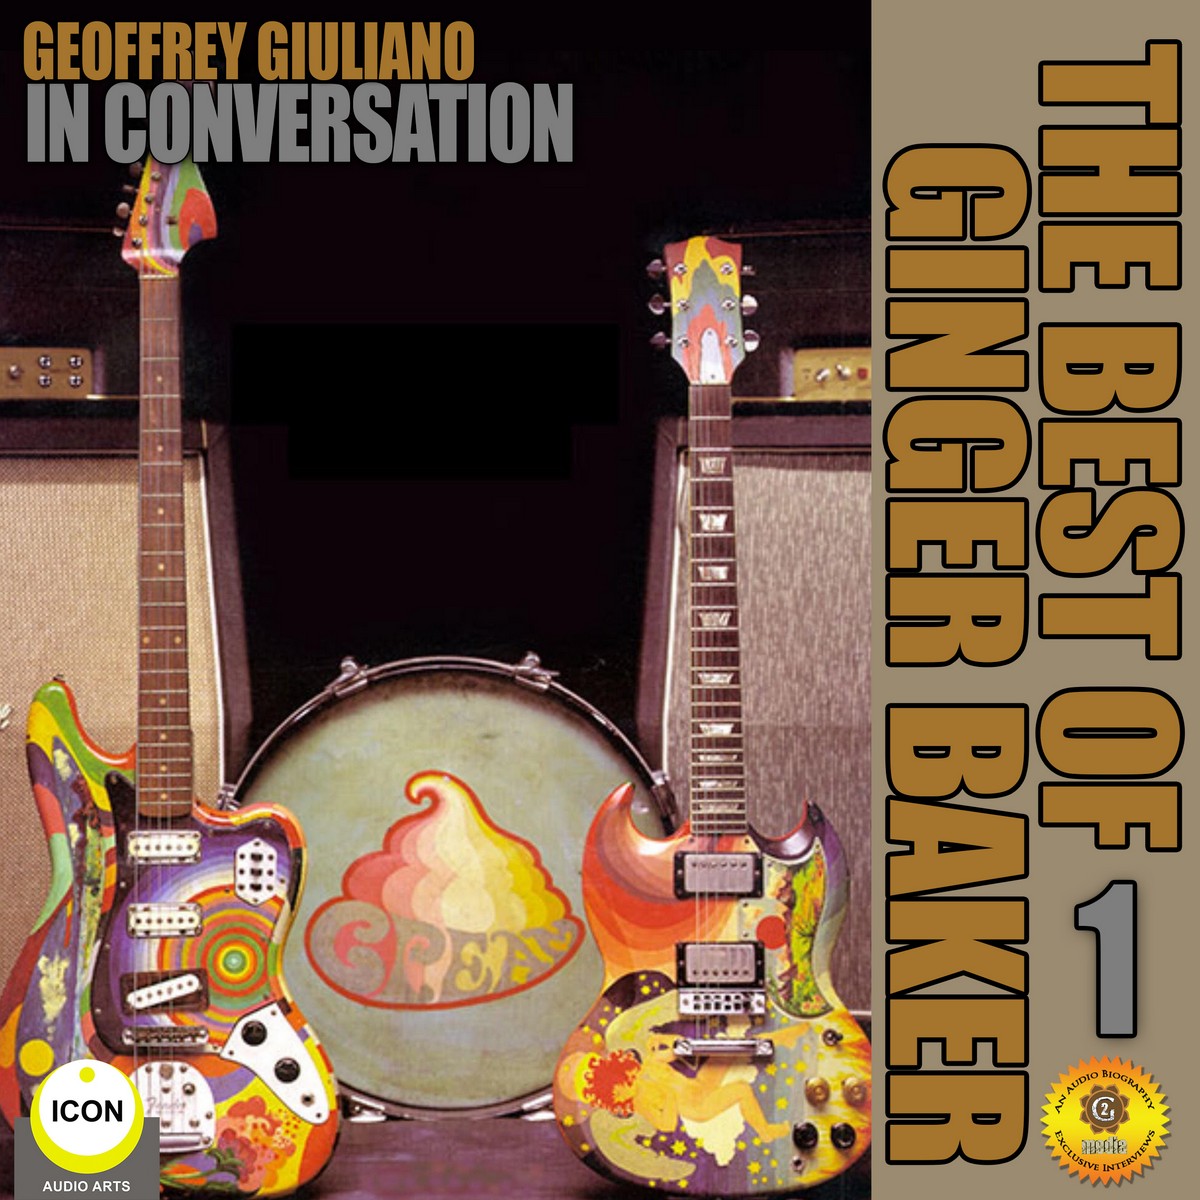 Geoffrey Giuliano’s In Conversation: The Best of Ginger Baker 1